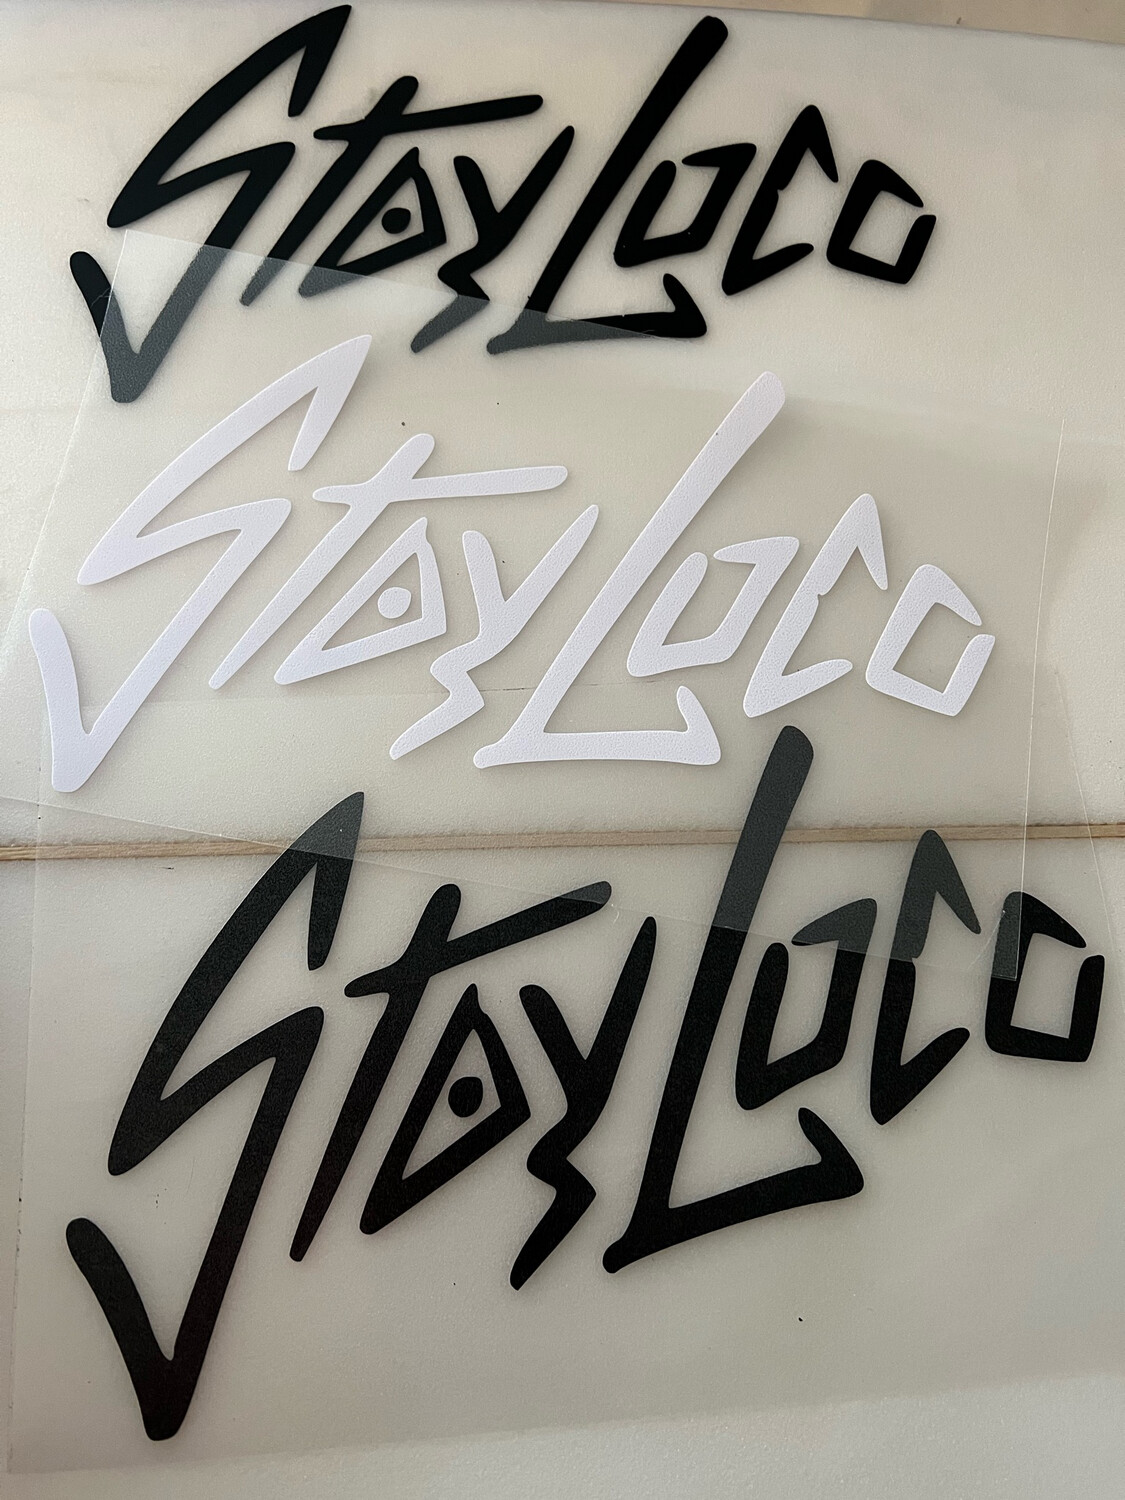 NEW StayLoco Sticker 10 in. & 5in. !!